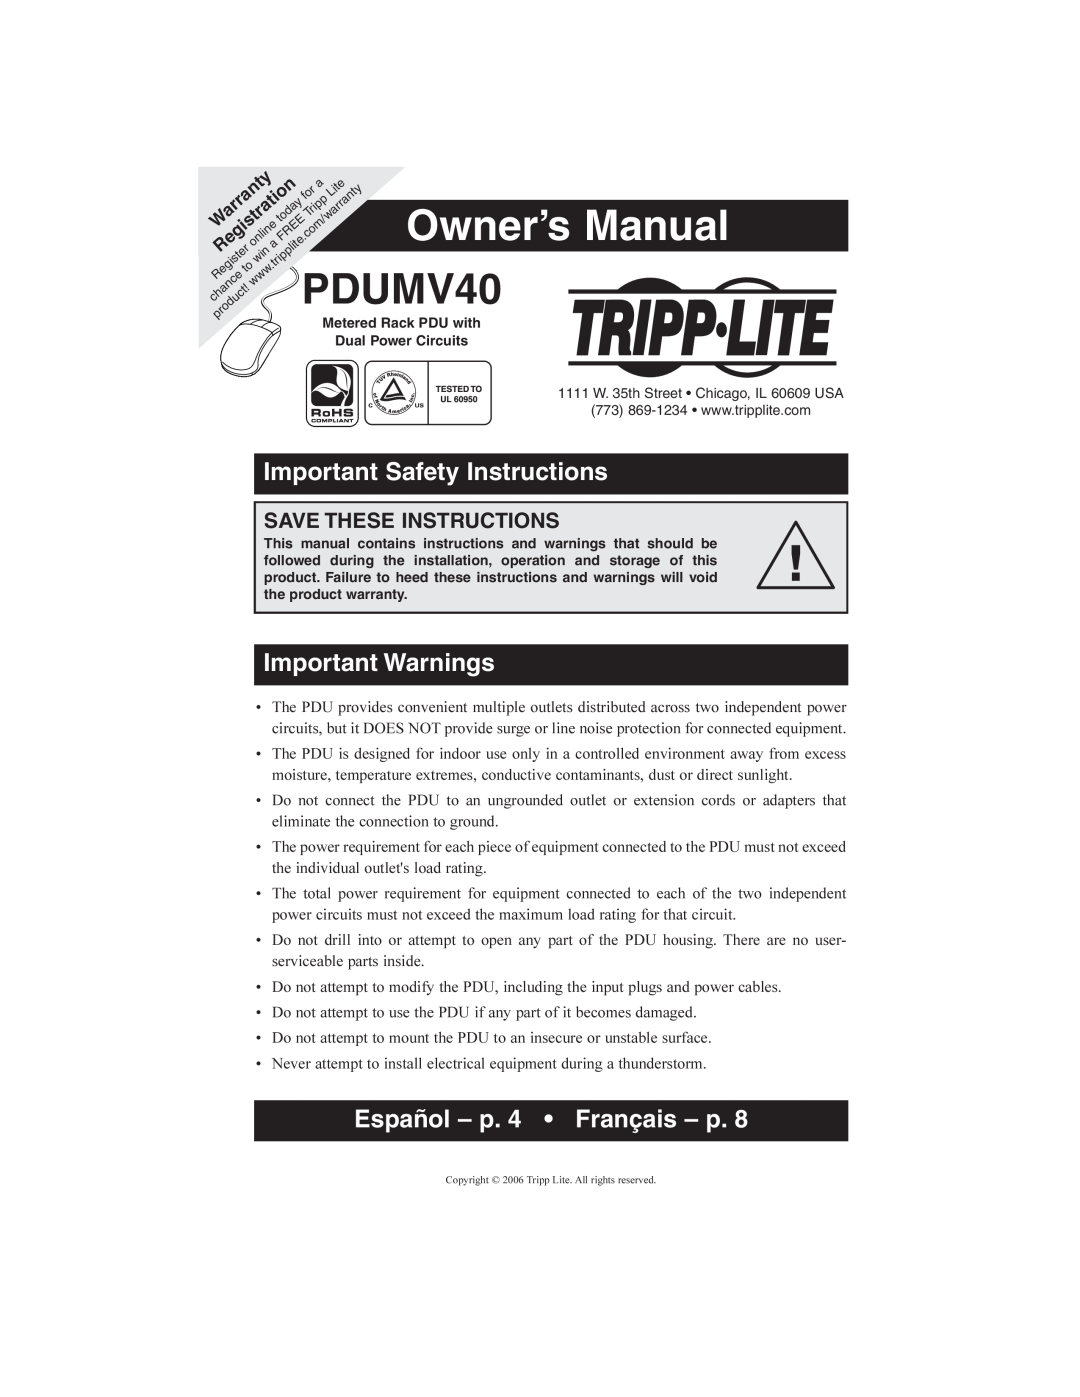 Tripp Lite PDUMV40 owner manual Important Safety Instructions, Important Warnings, Español - p. 4 Français - p, Warranty 